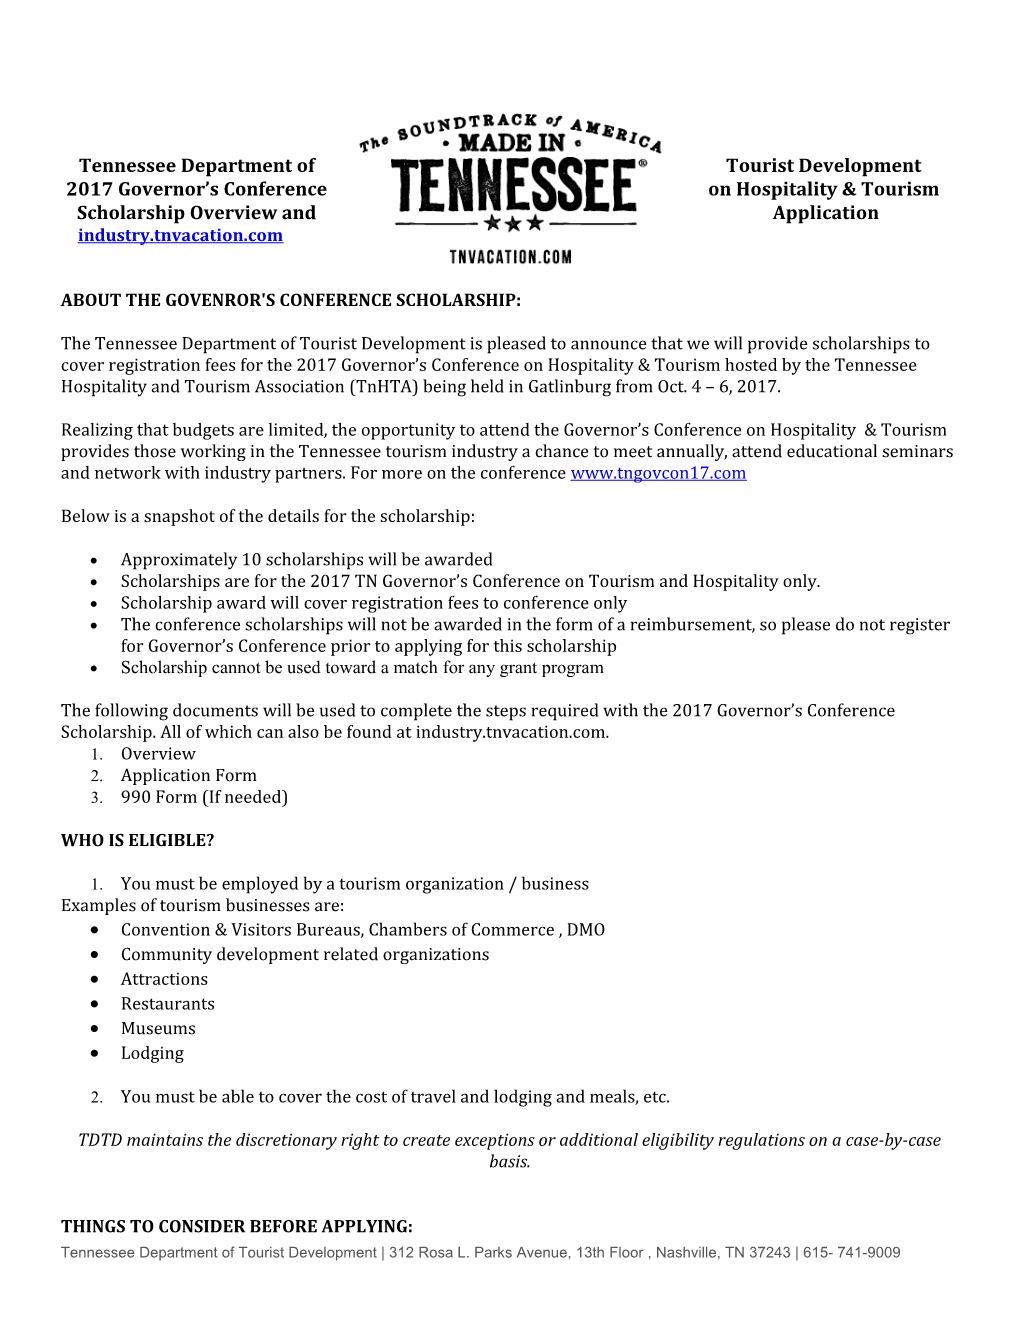 Tennessee Department of Tourist Development